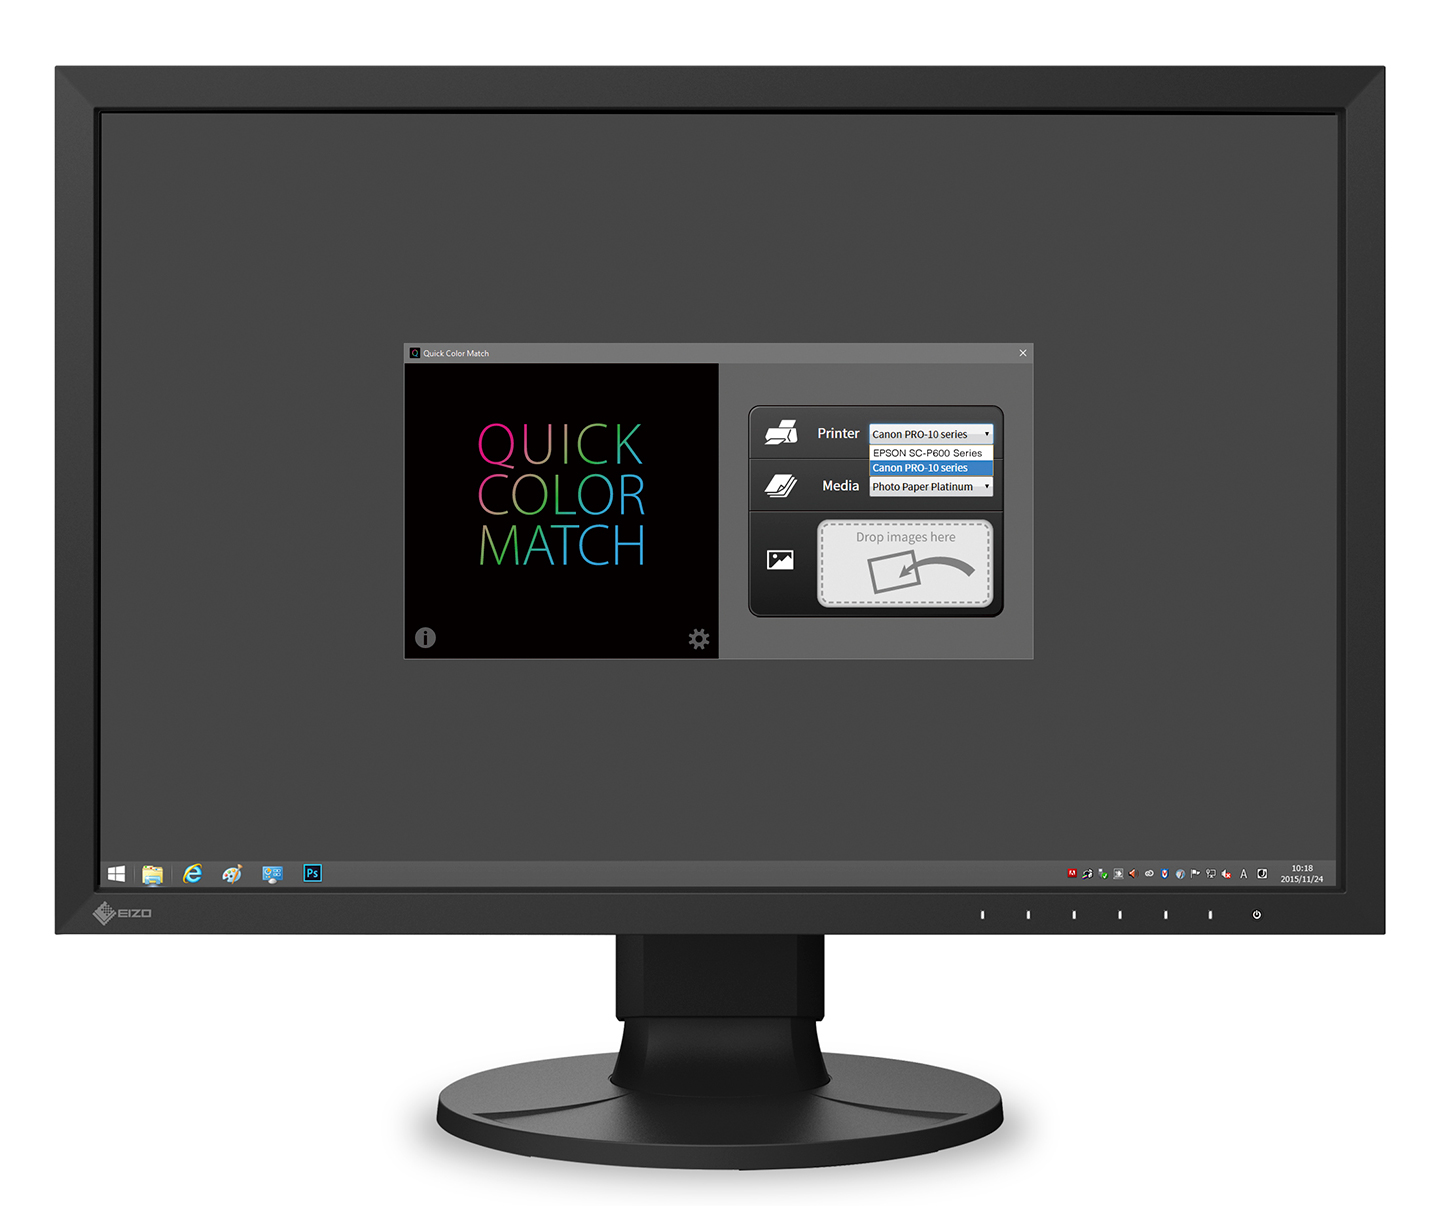 Quick Color Match Software